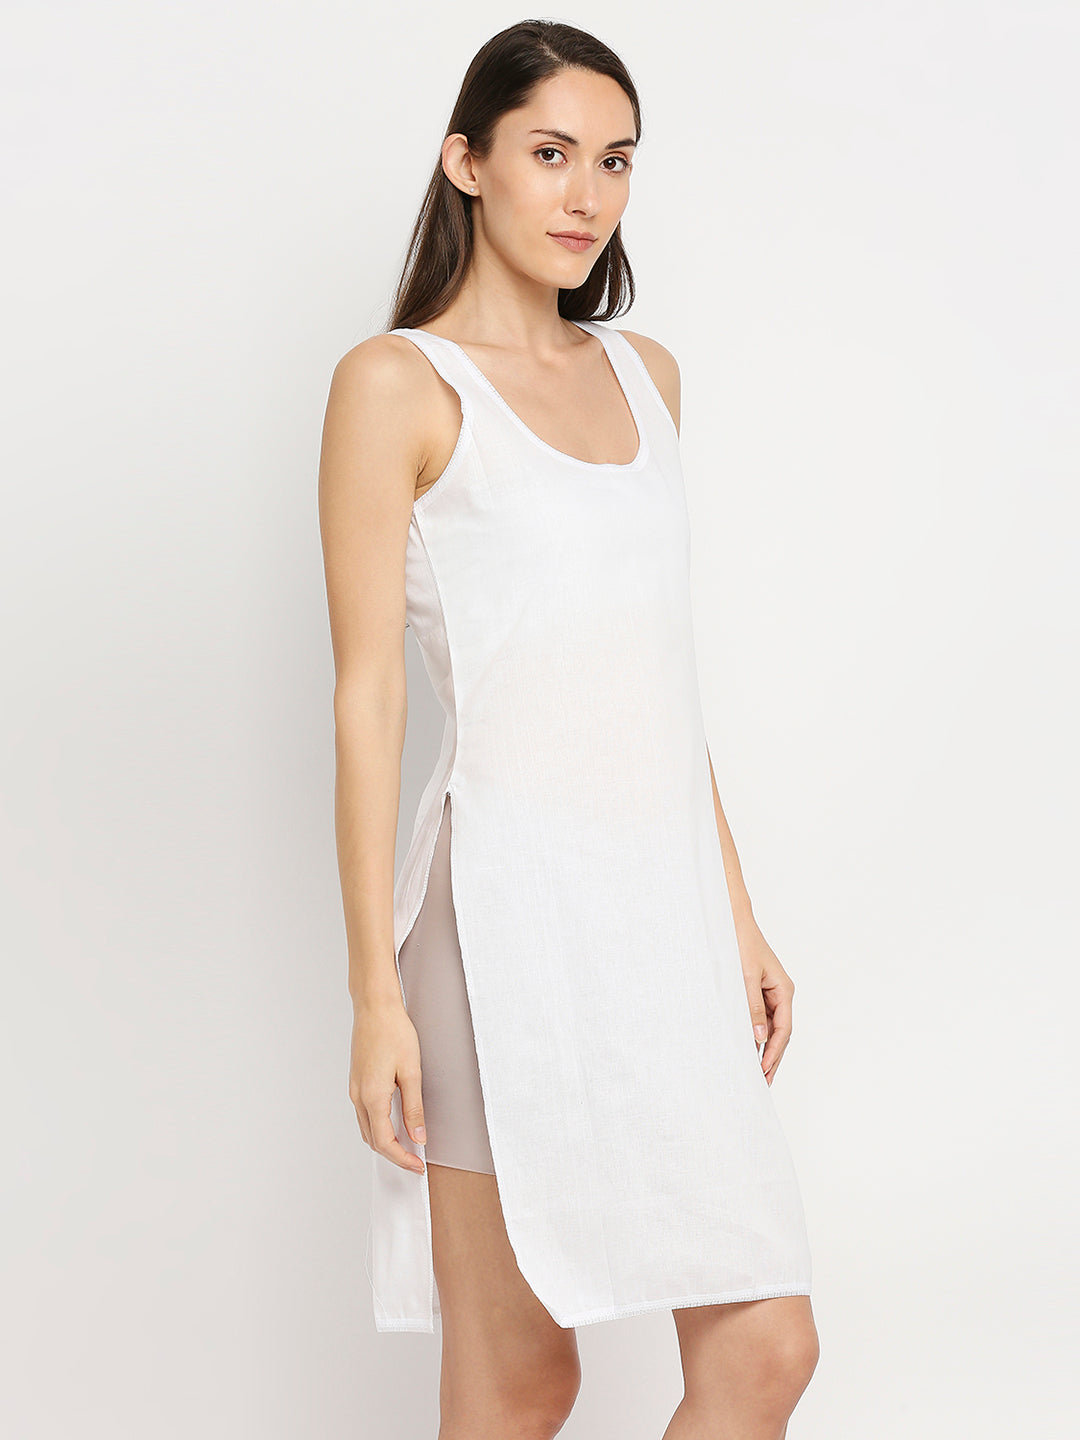 Ethnic Hand Block Printed Pure Cotton Long Tunic Top/Kurti For Women White  | eBay